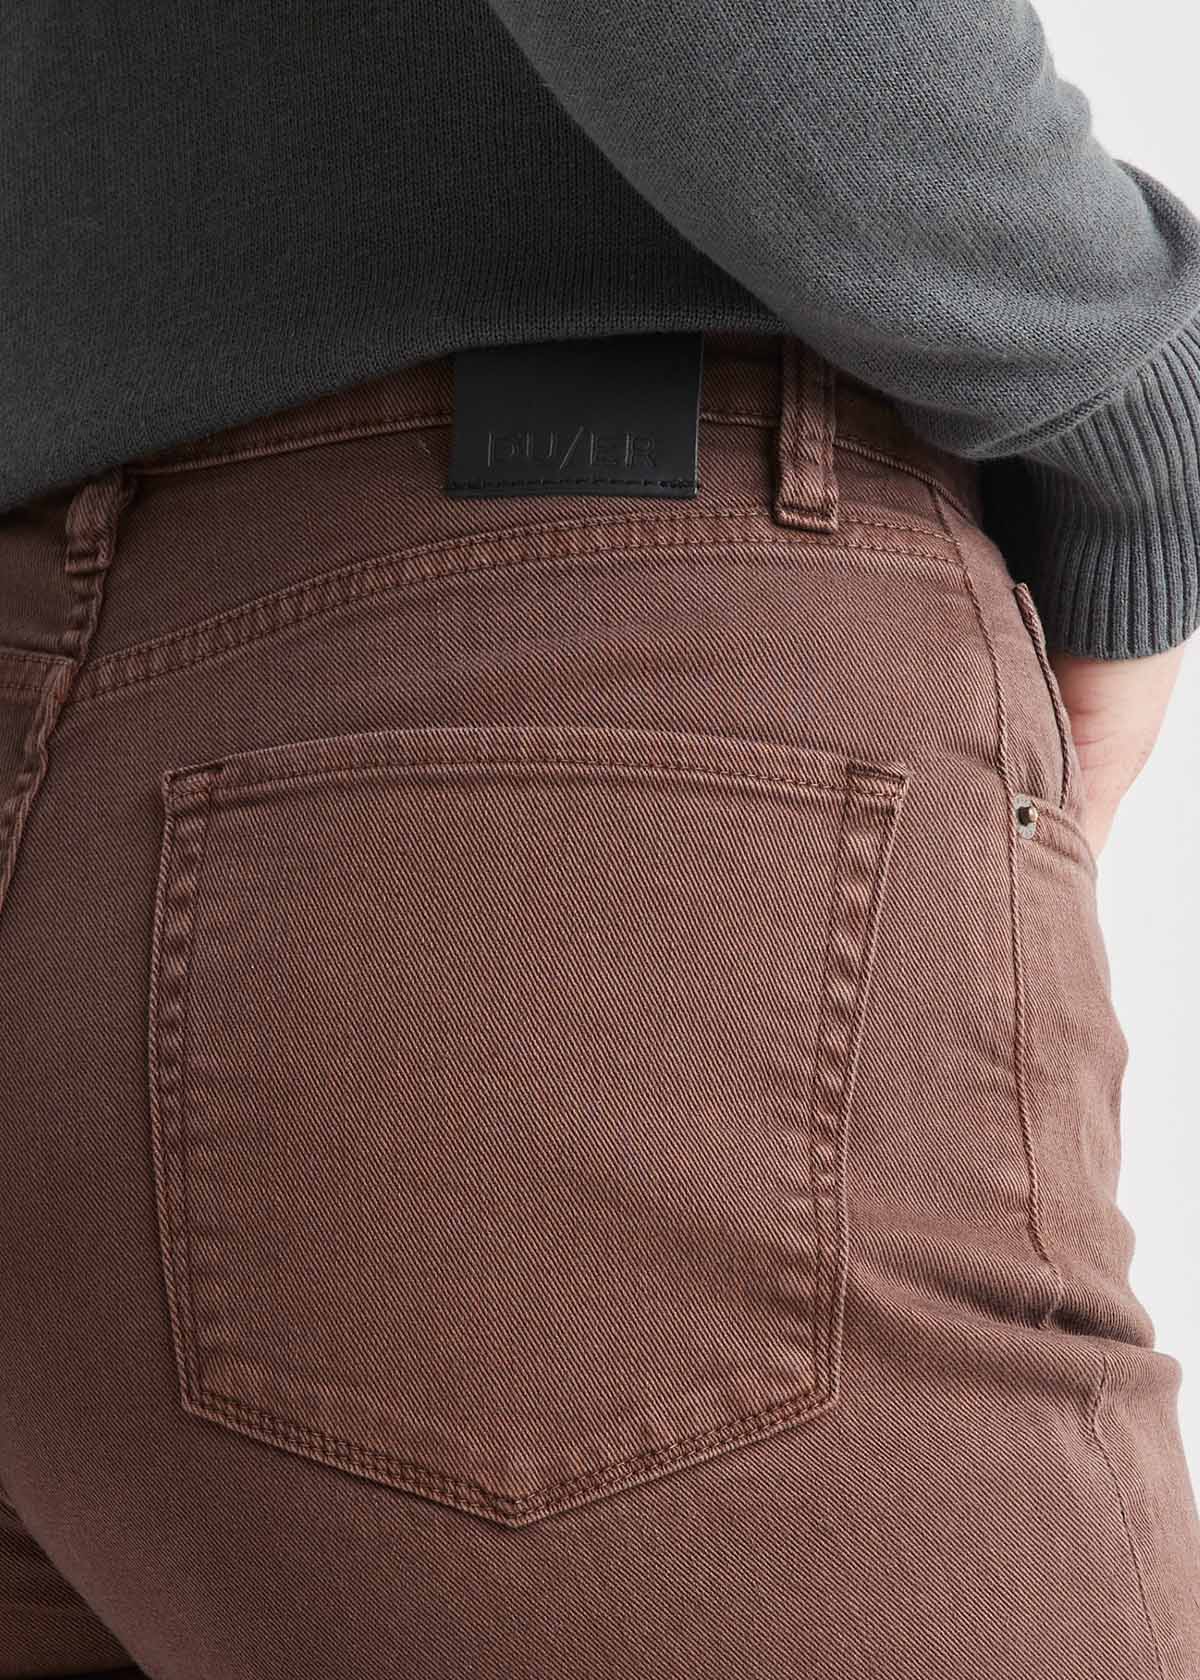 womens brown coloured high rise 90s jean back waistband detail